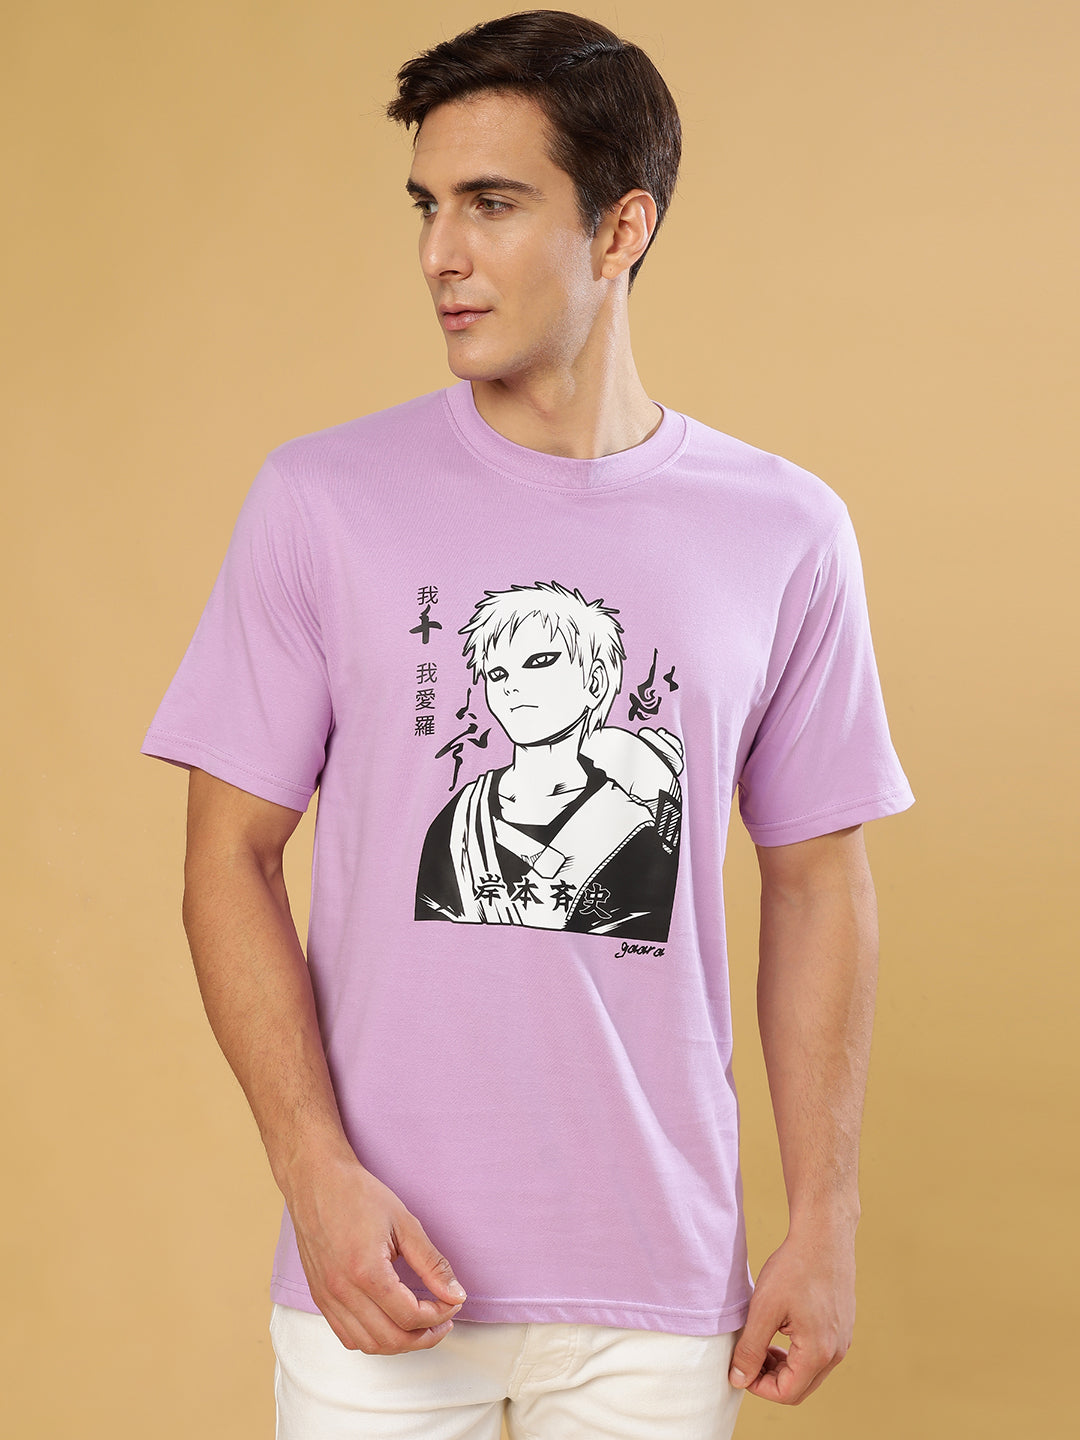 Shinobi lavender Regular T-Shirts